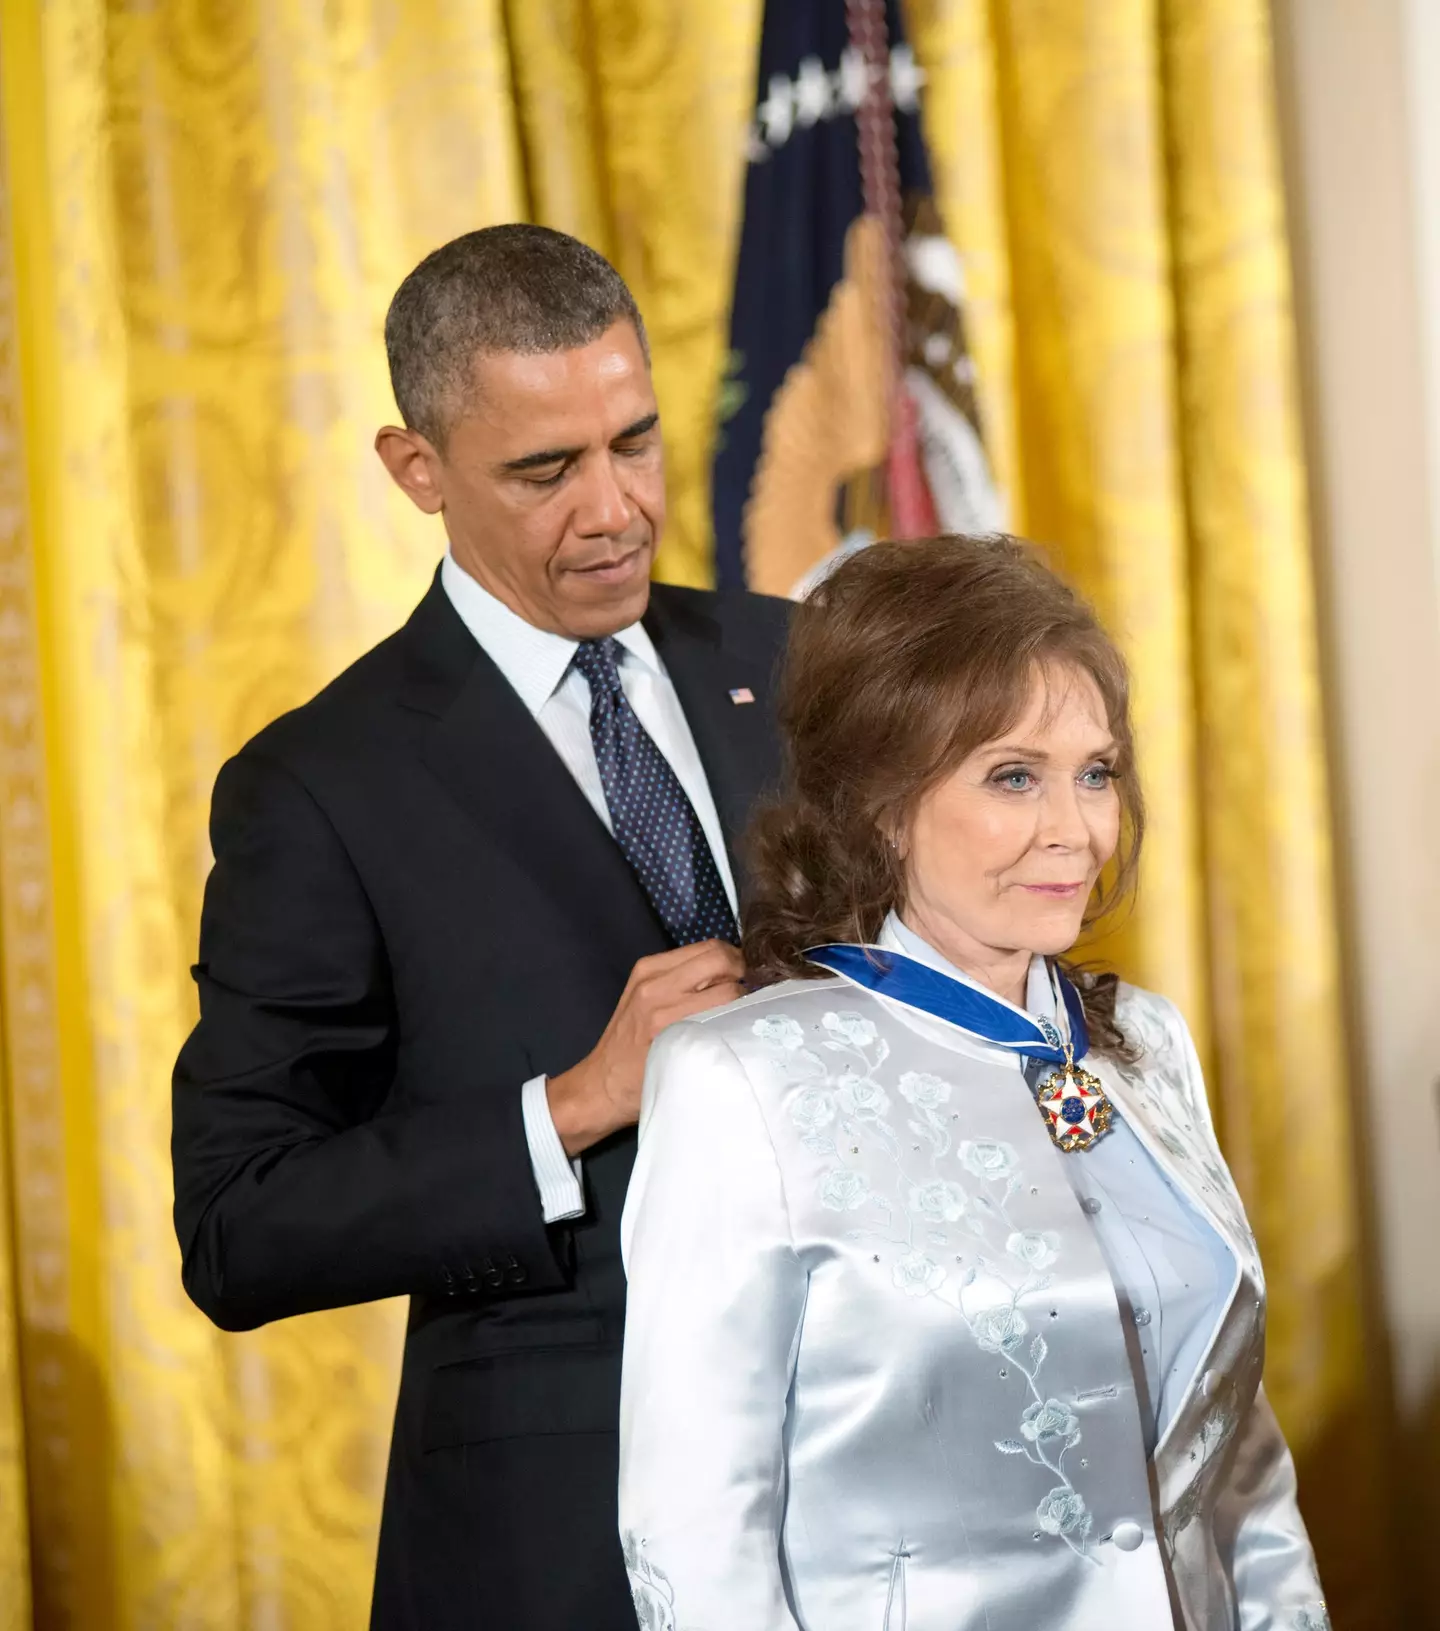 President Obama presenting the Medal of Freedom to Loretta Lynn in 2013.